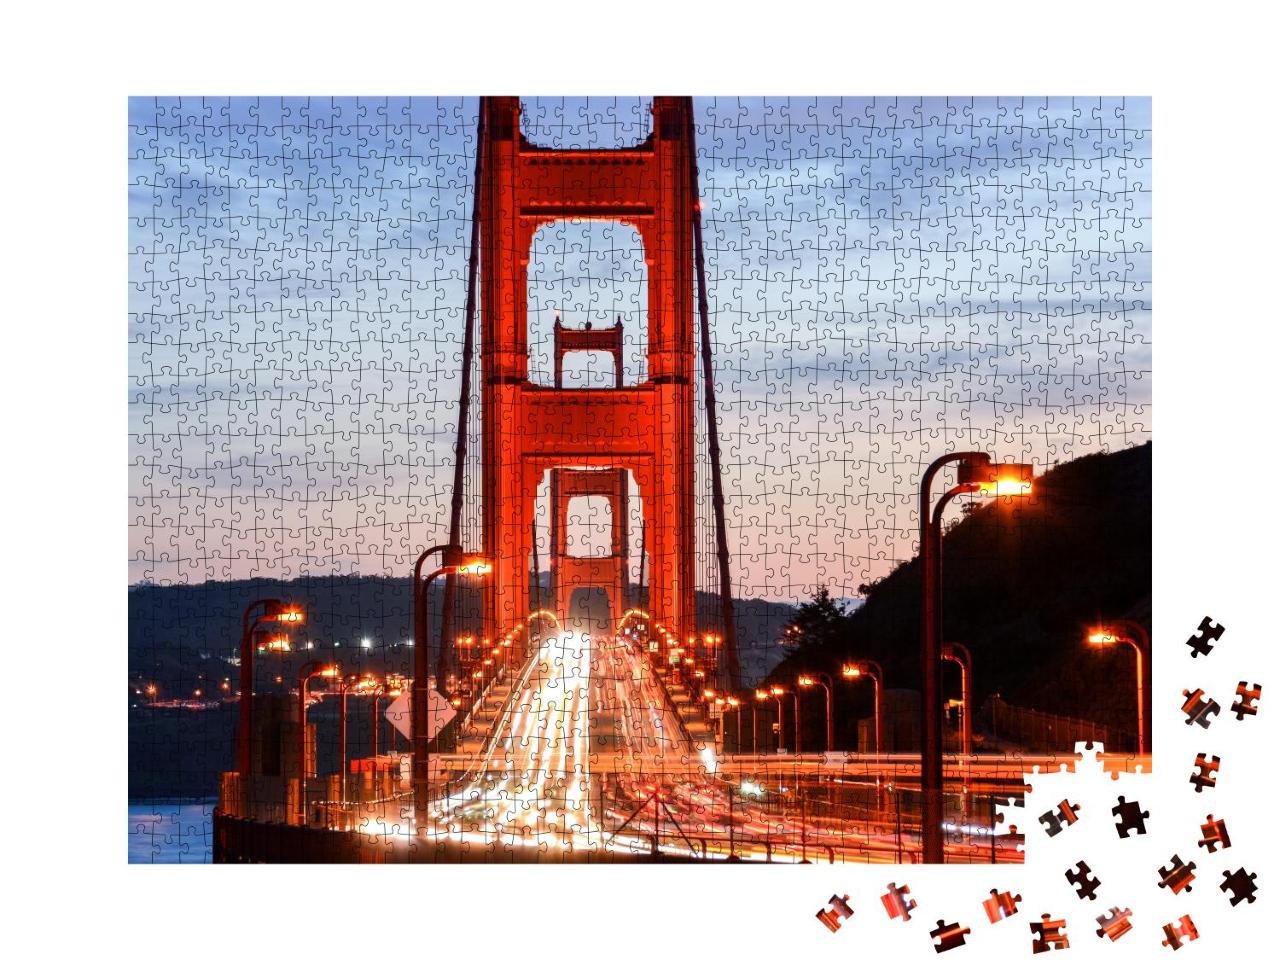 Puzzle 1000 Teile „Golden Gate Bridge bei Nacht, San Francisco“